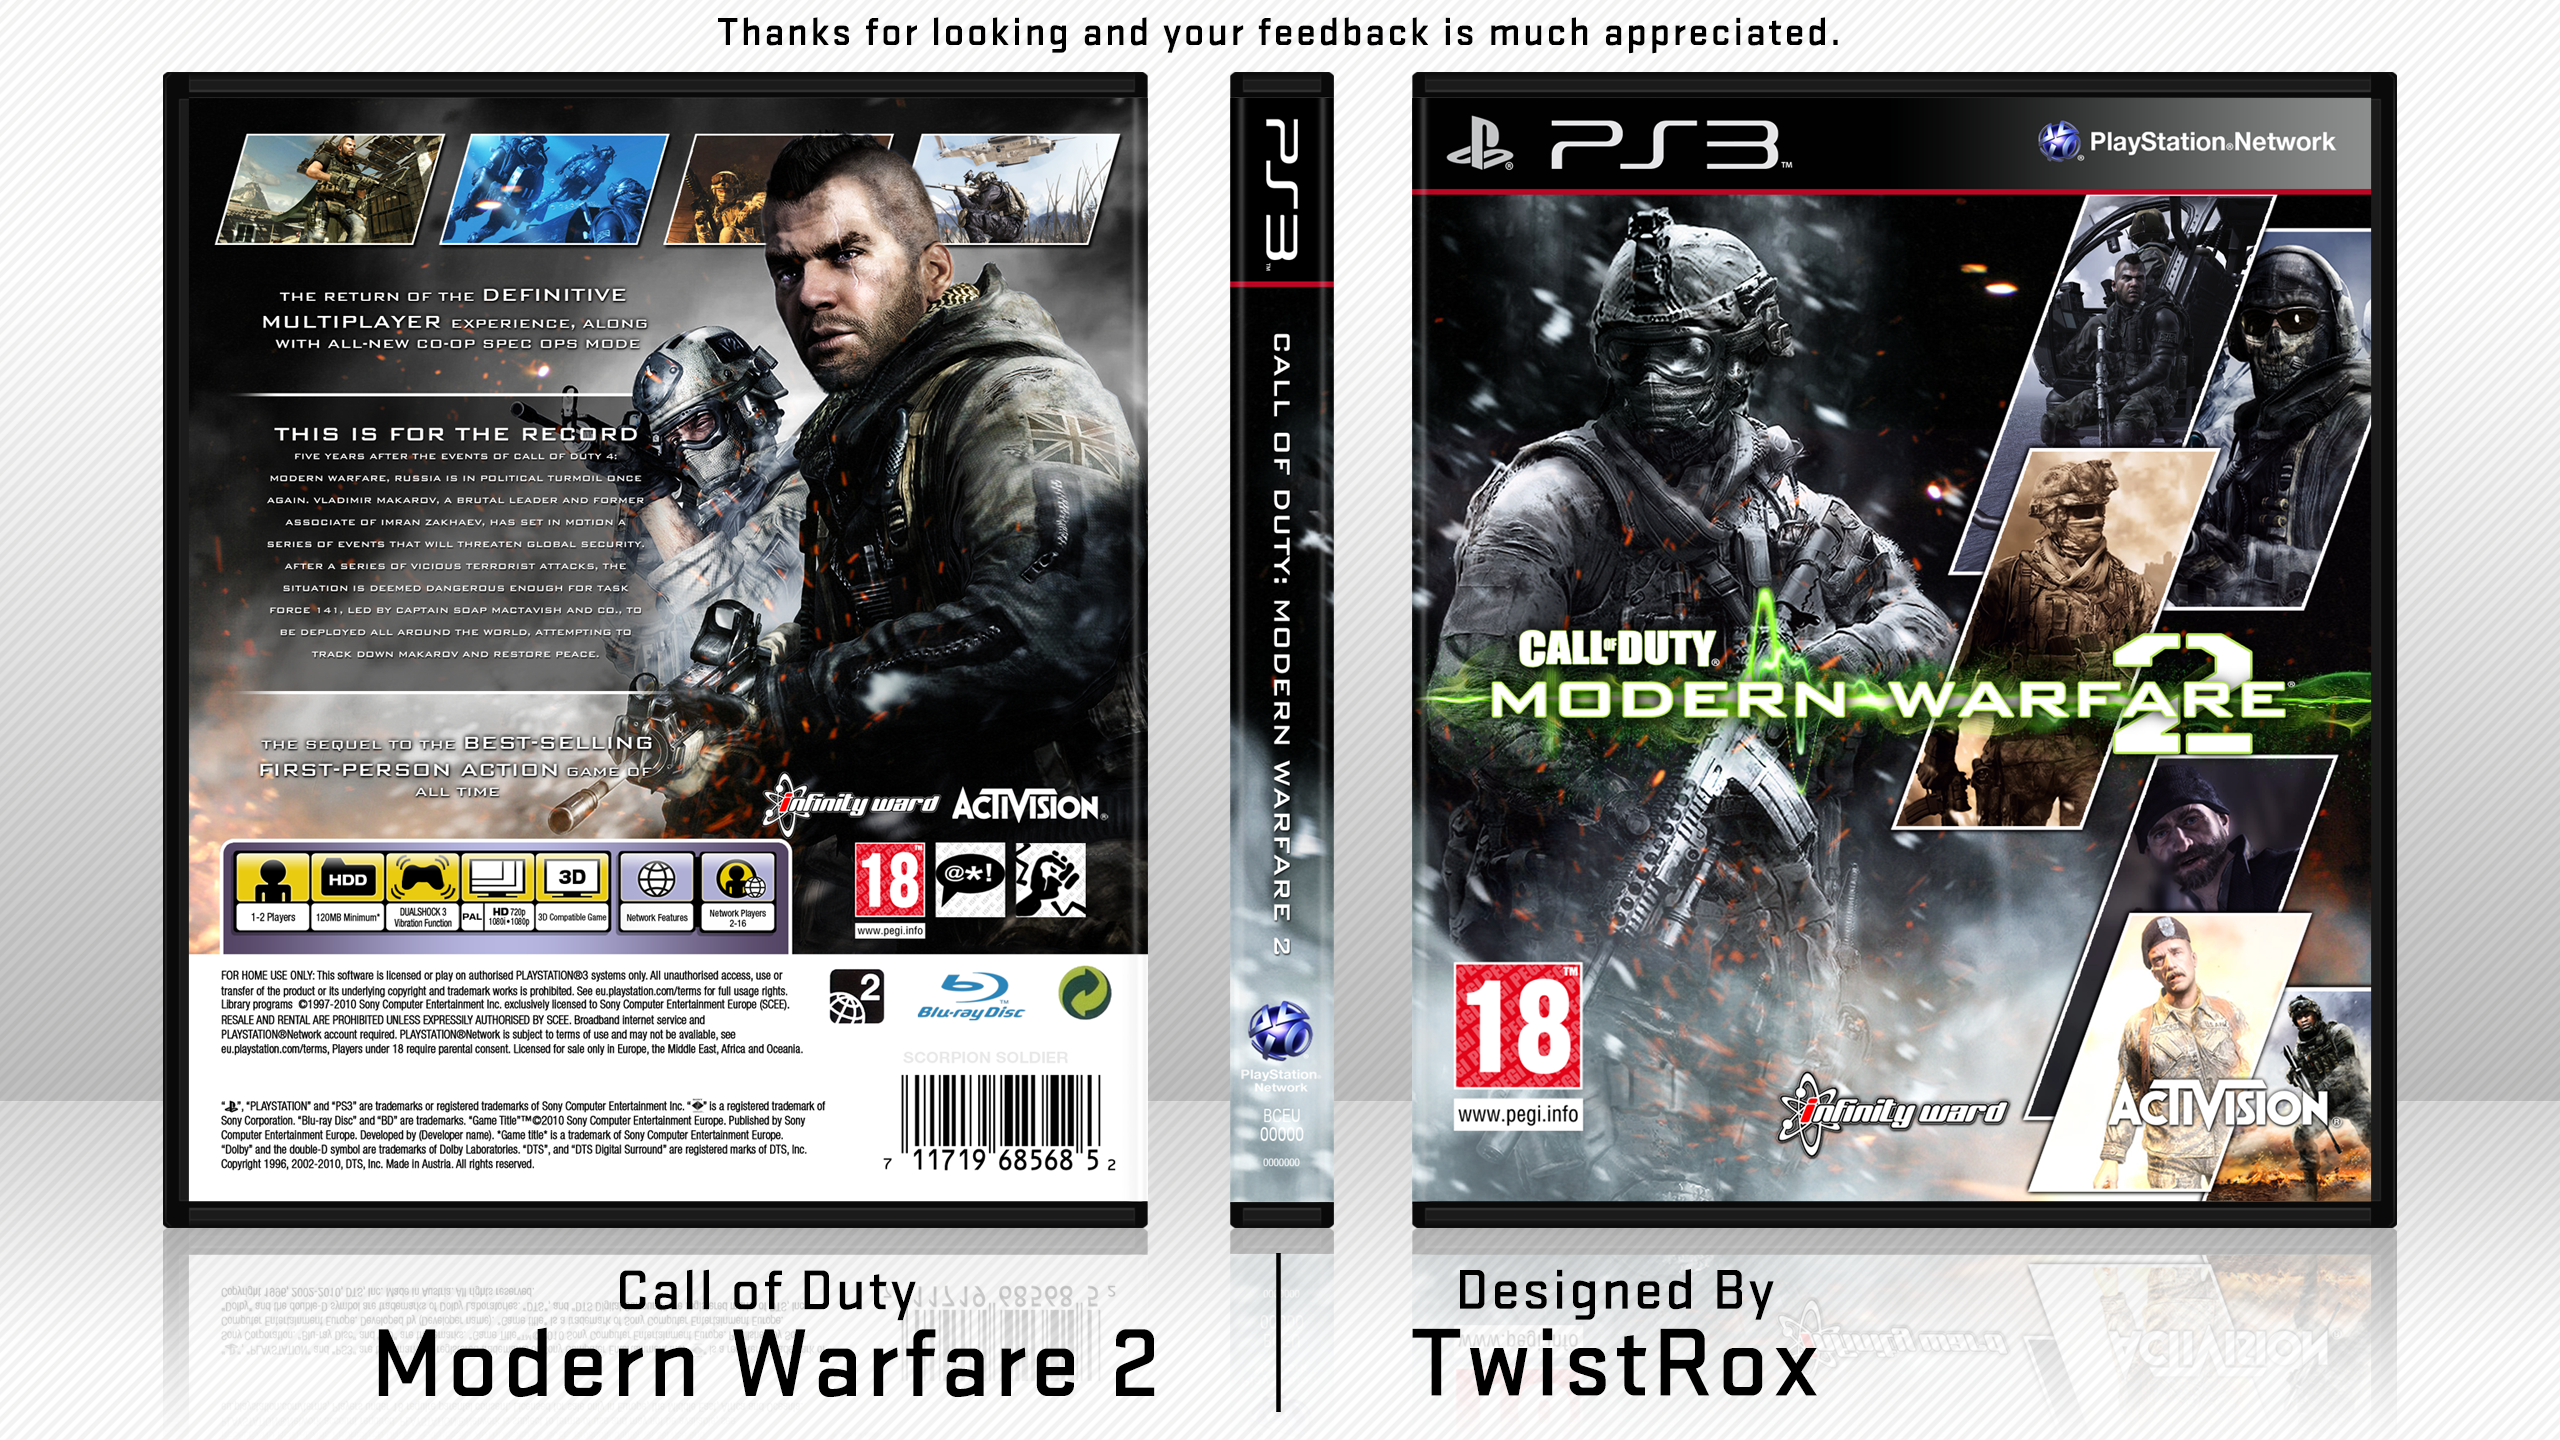 Call of Duty: Modern Warfare 2 box cover